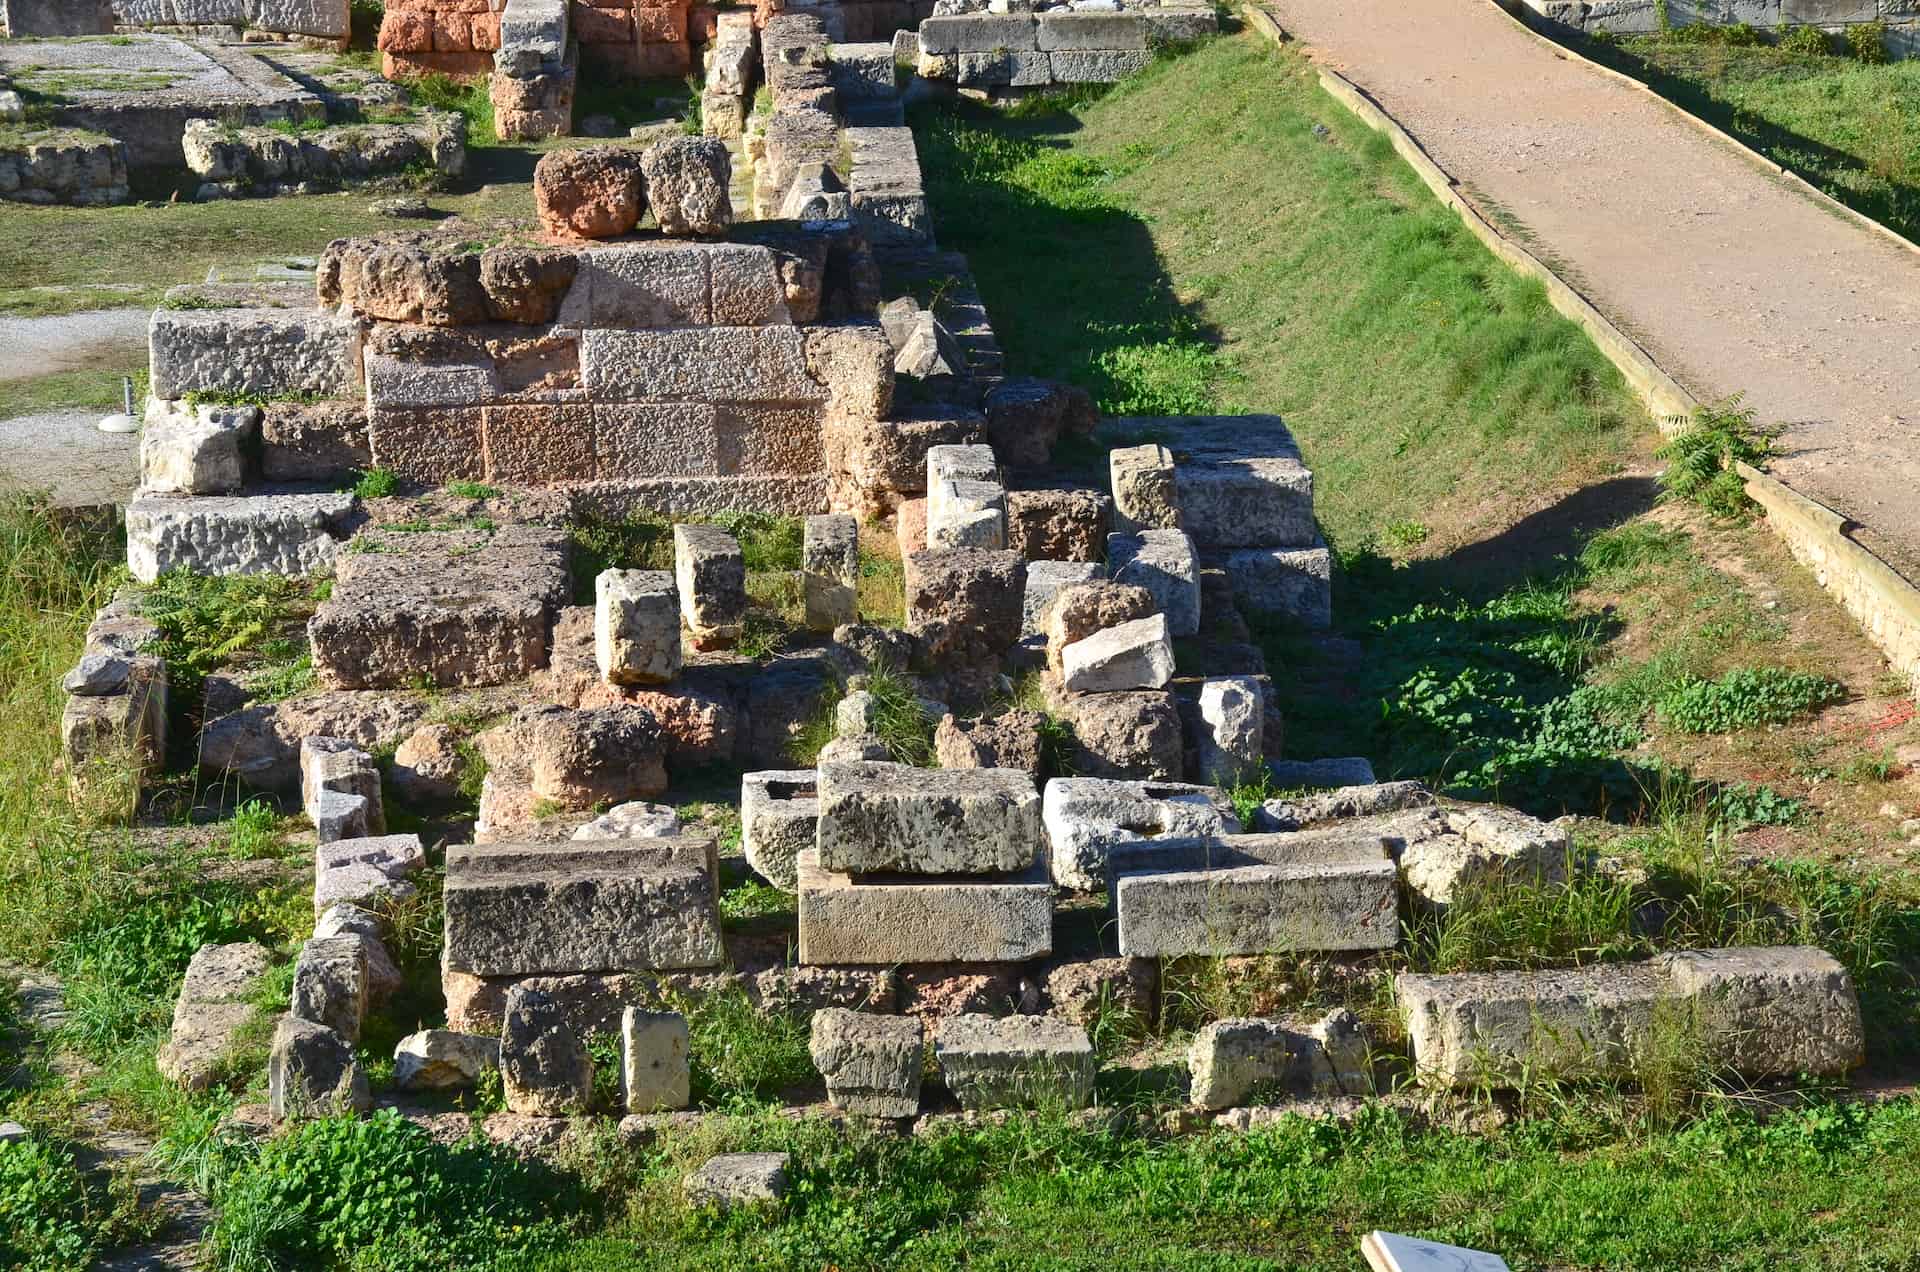 Southwest tower of the Dipylon at Kerameikos Archaeological Site, Athens, Greece